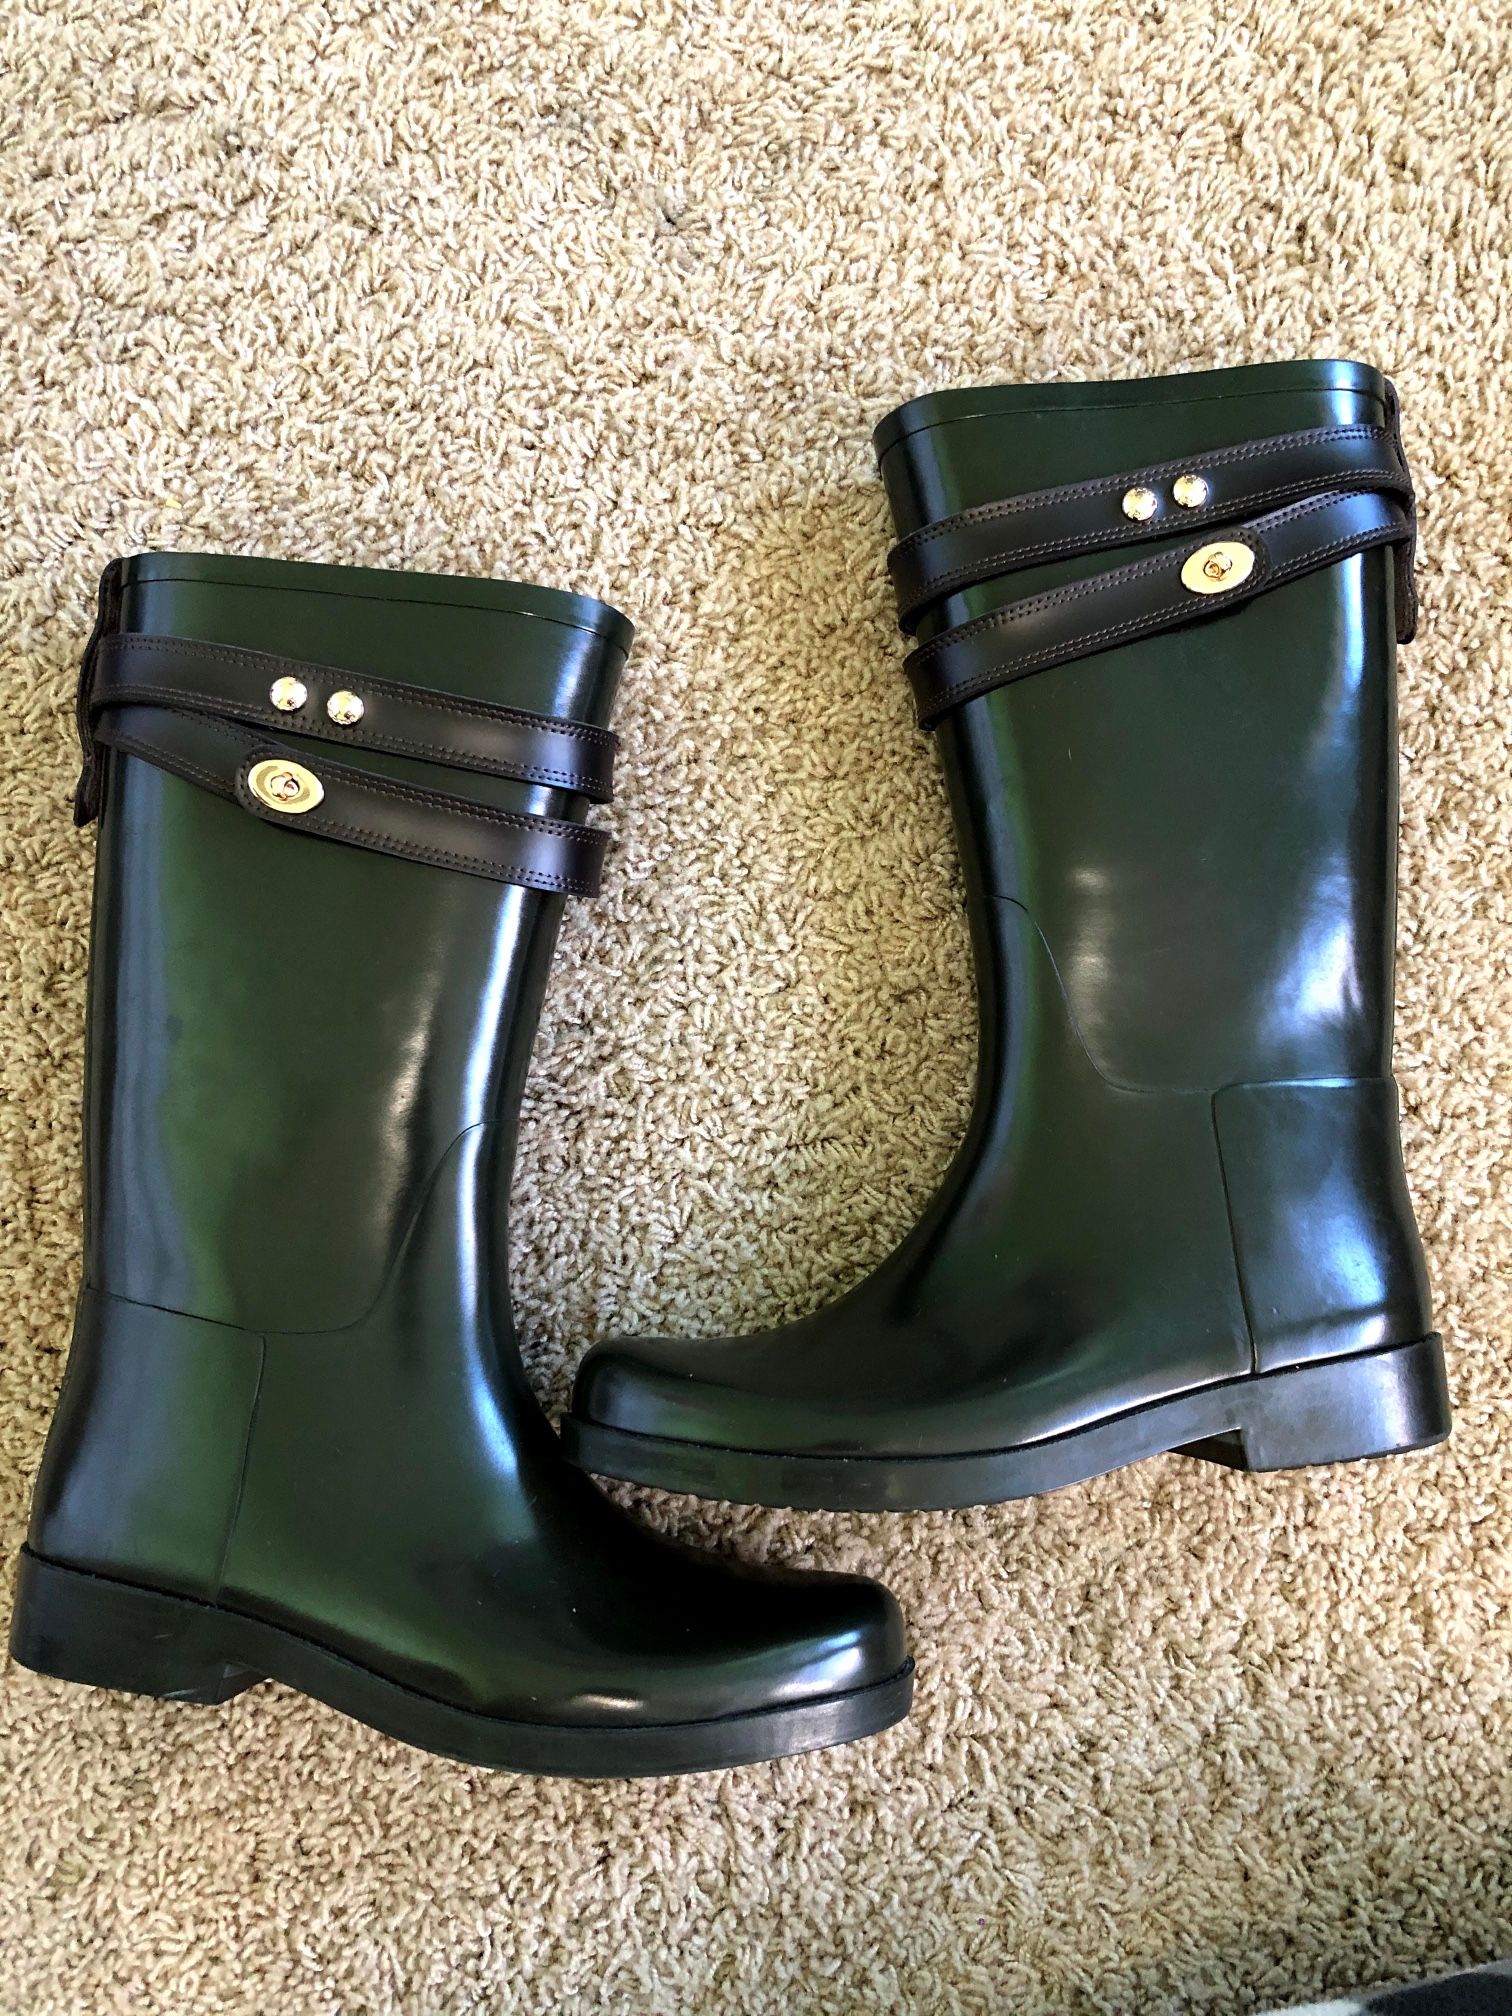 Coach Rubber Rain Boots - Super Cute - Size 8